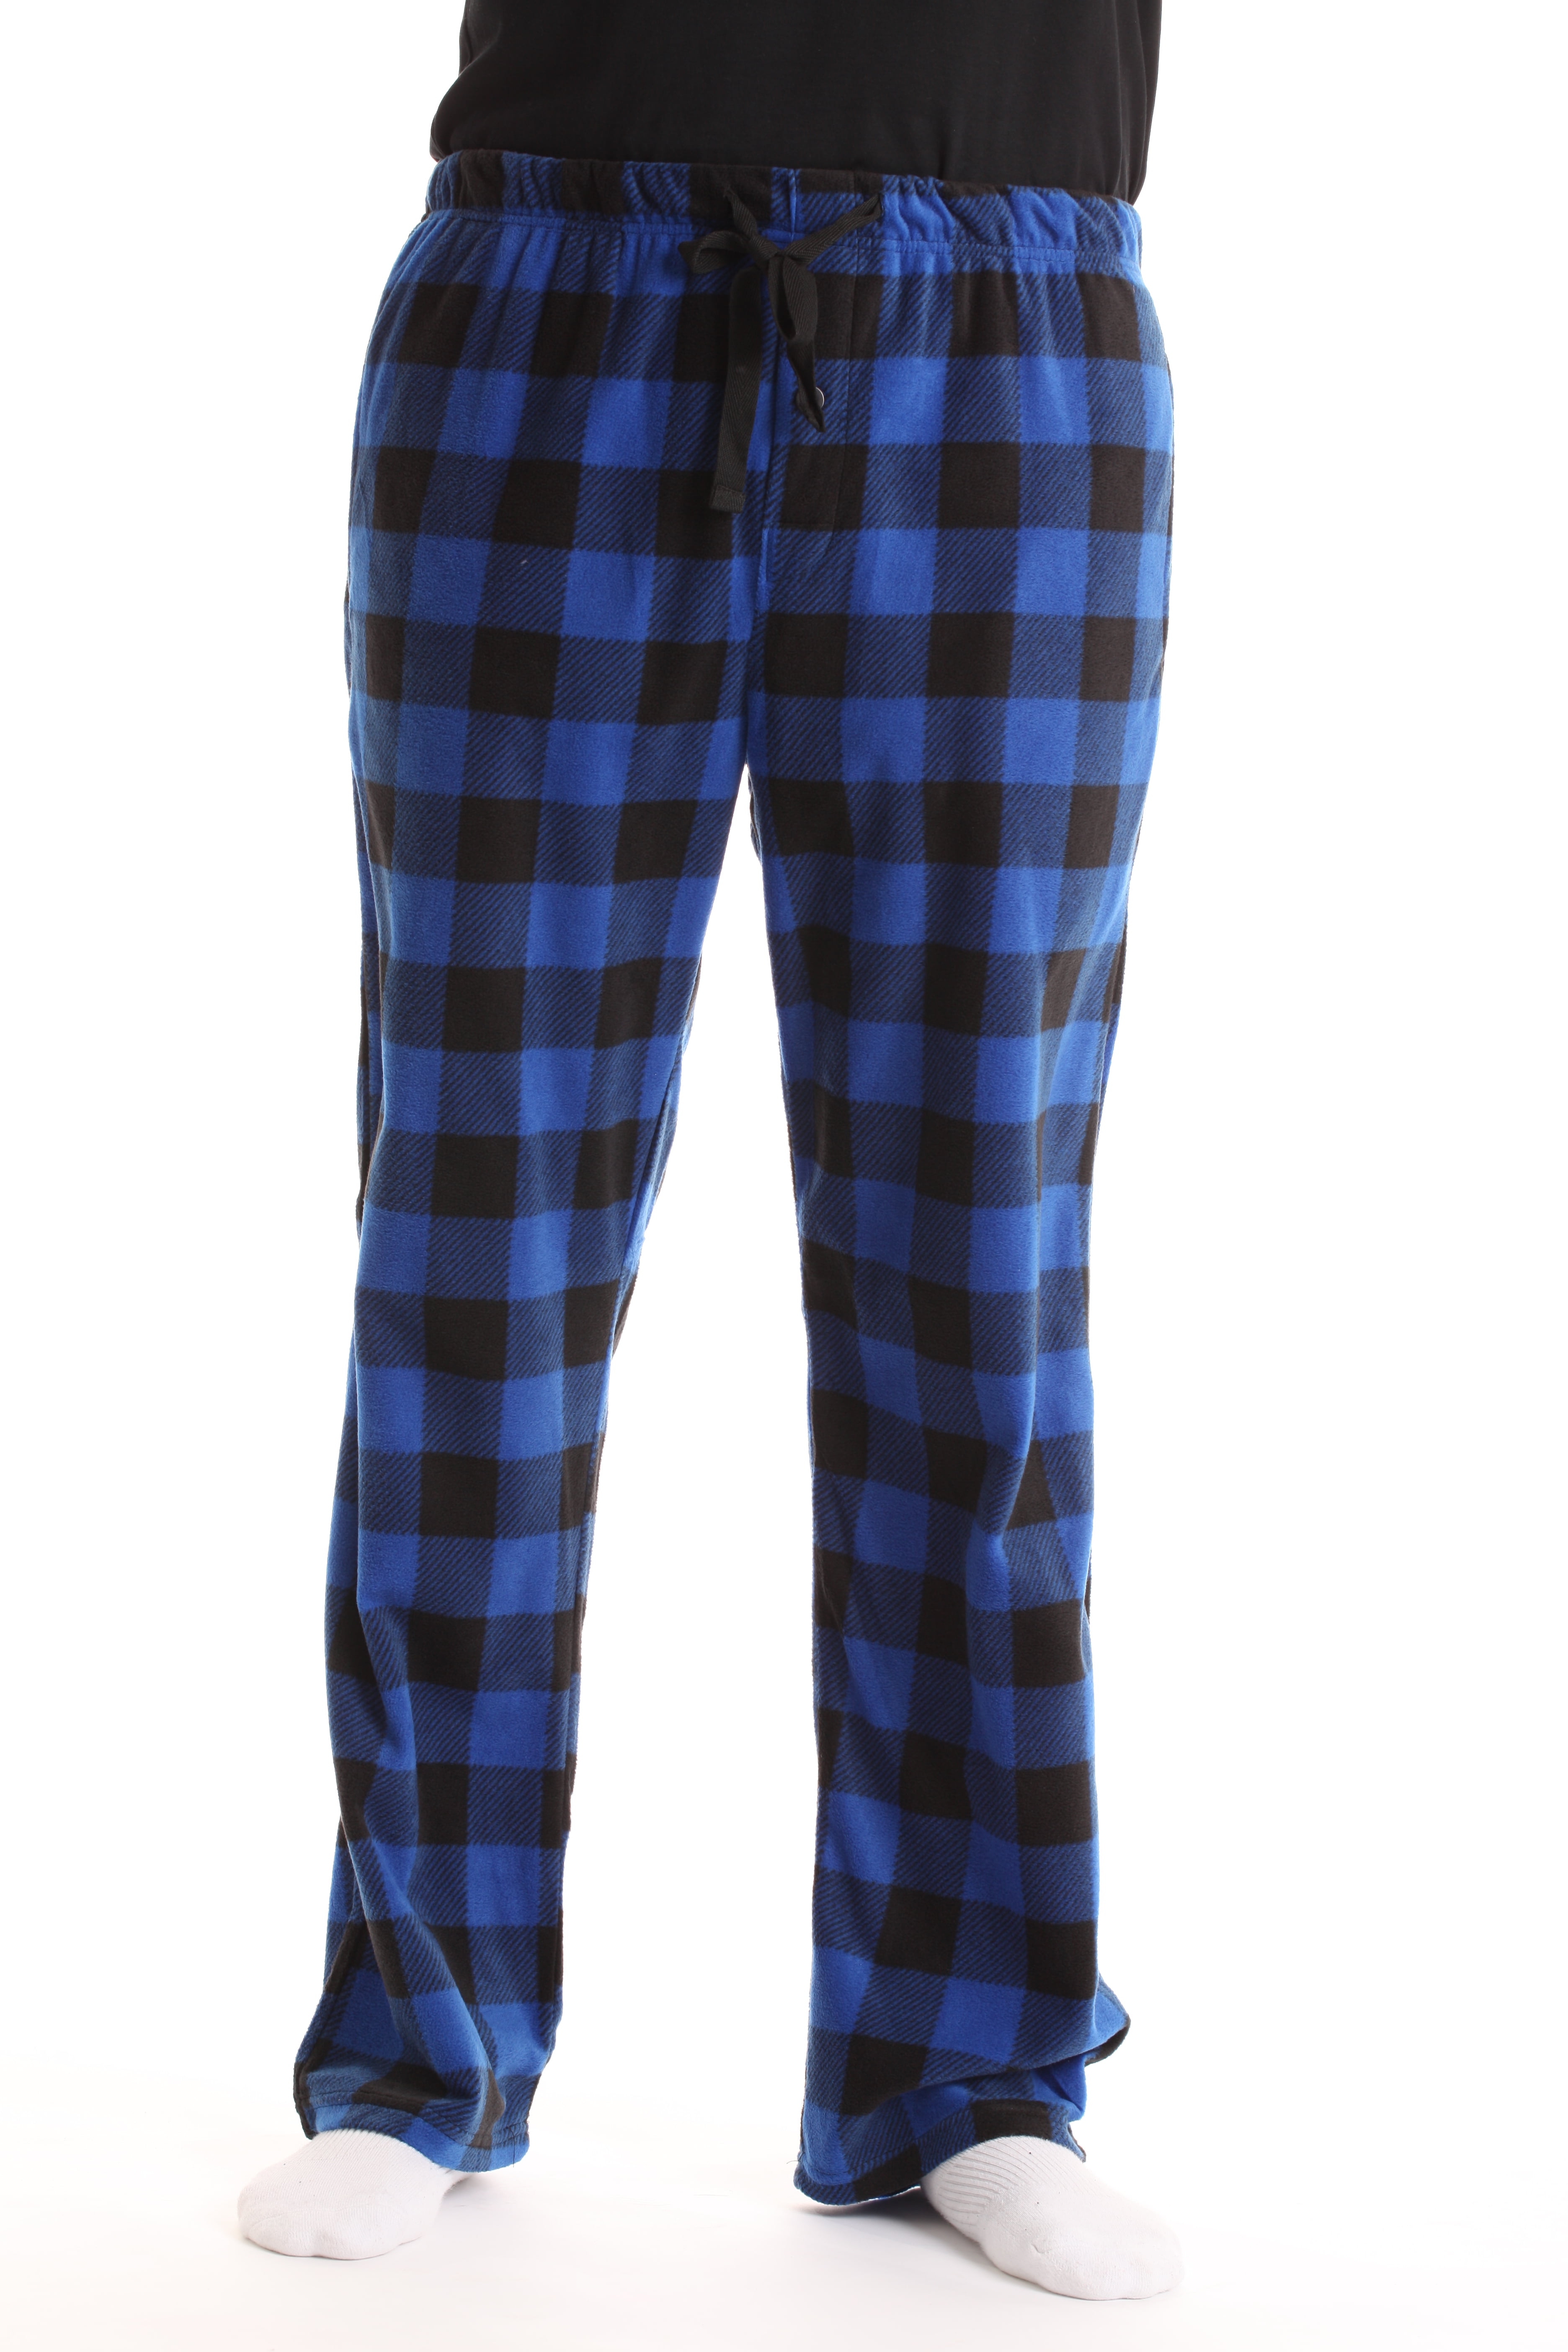 followme Microfleece Men's Buffalo Plaid Pajama Pants with Pockets (Blue  Plaid, Large) 